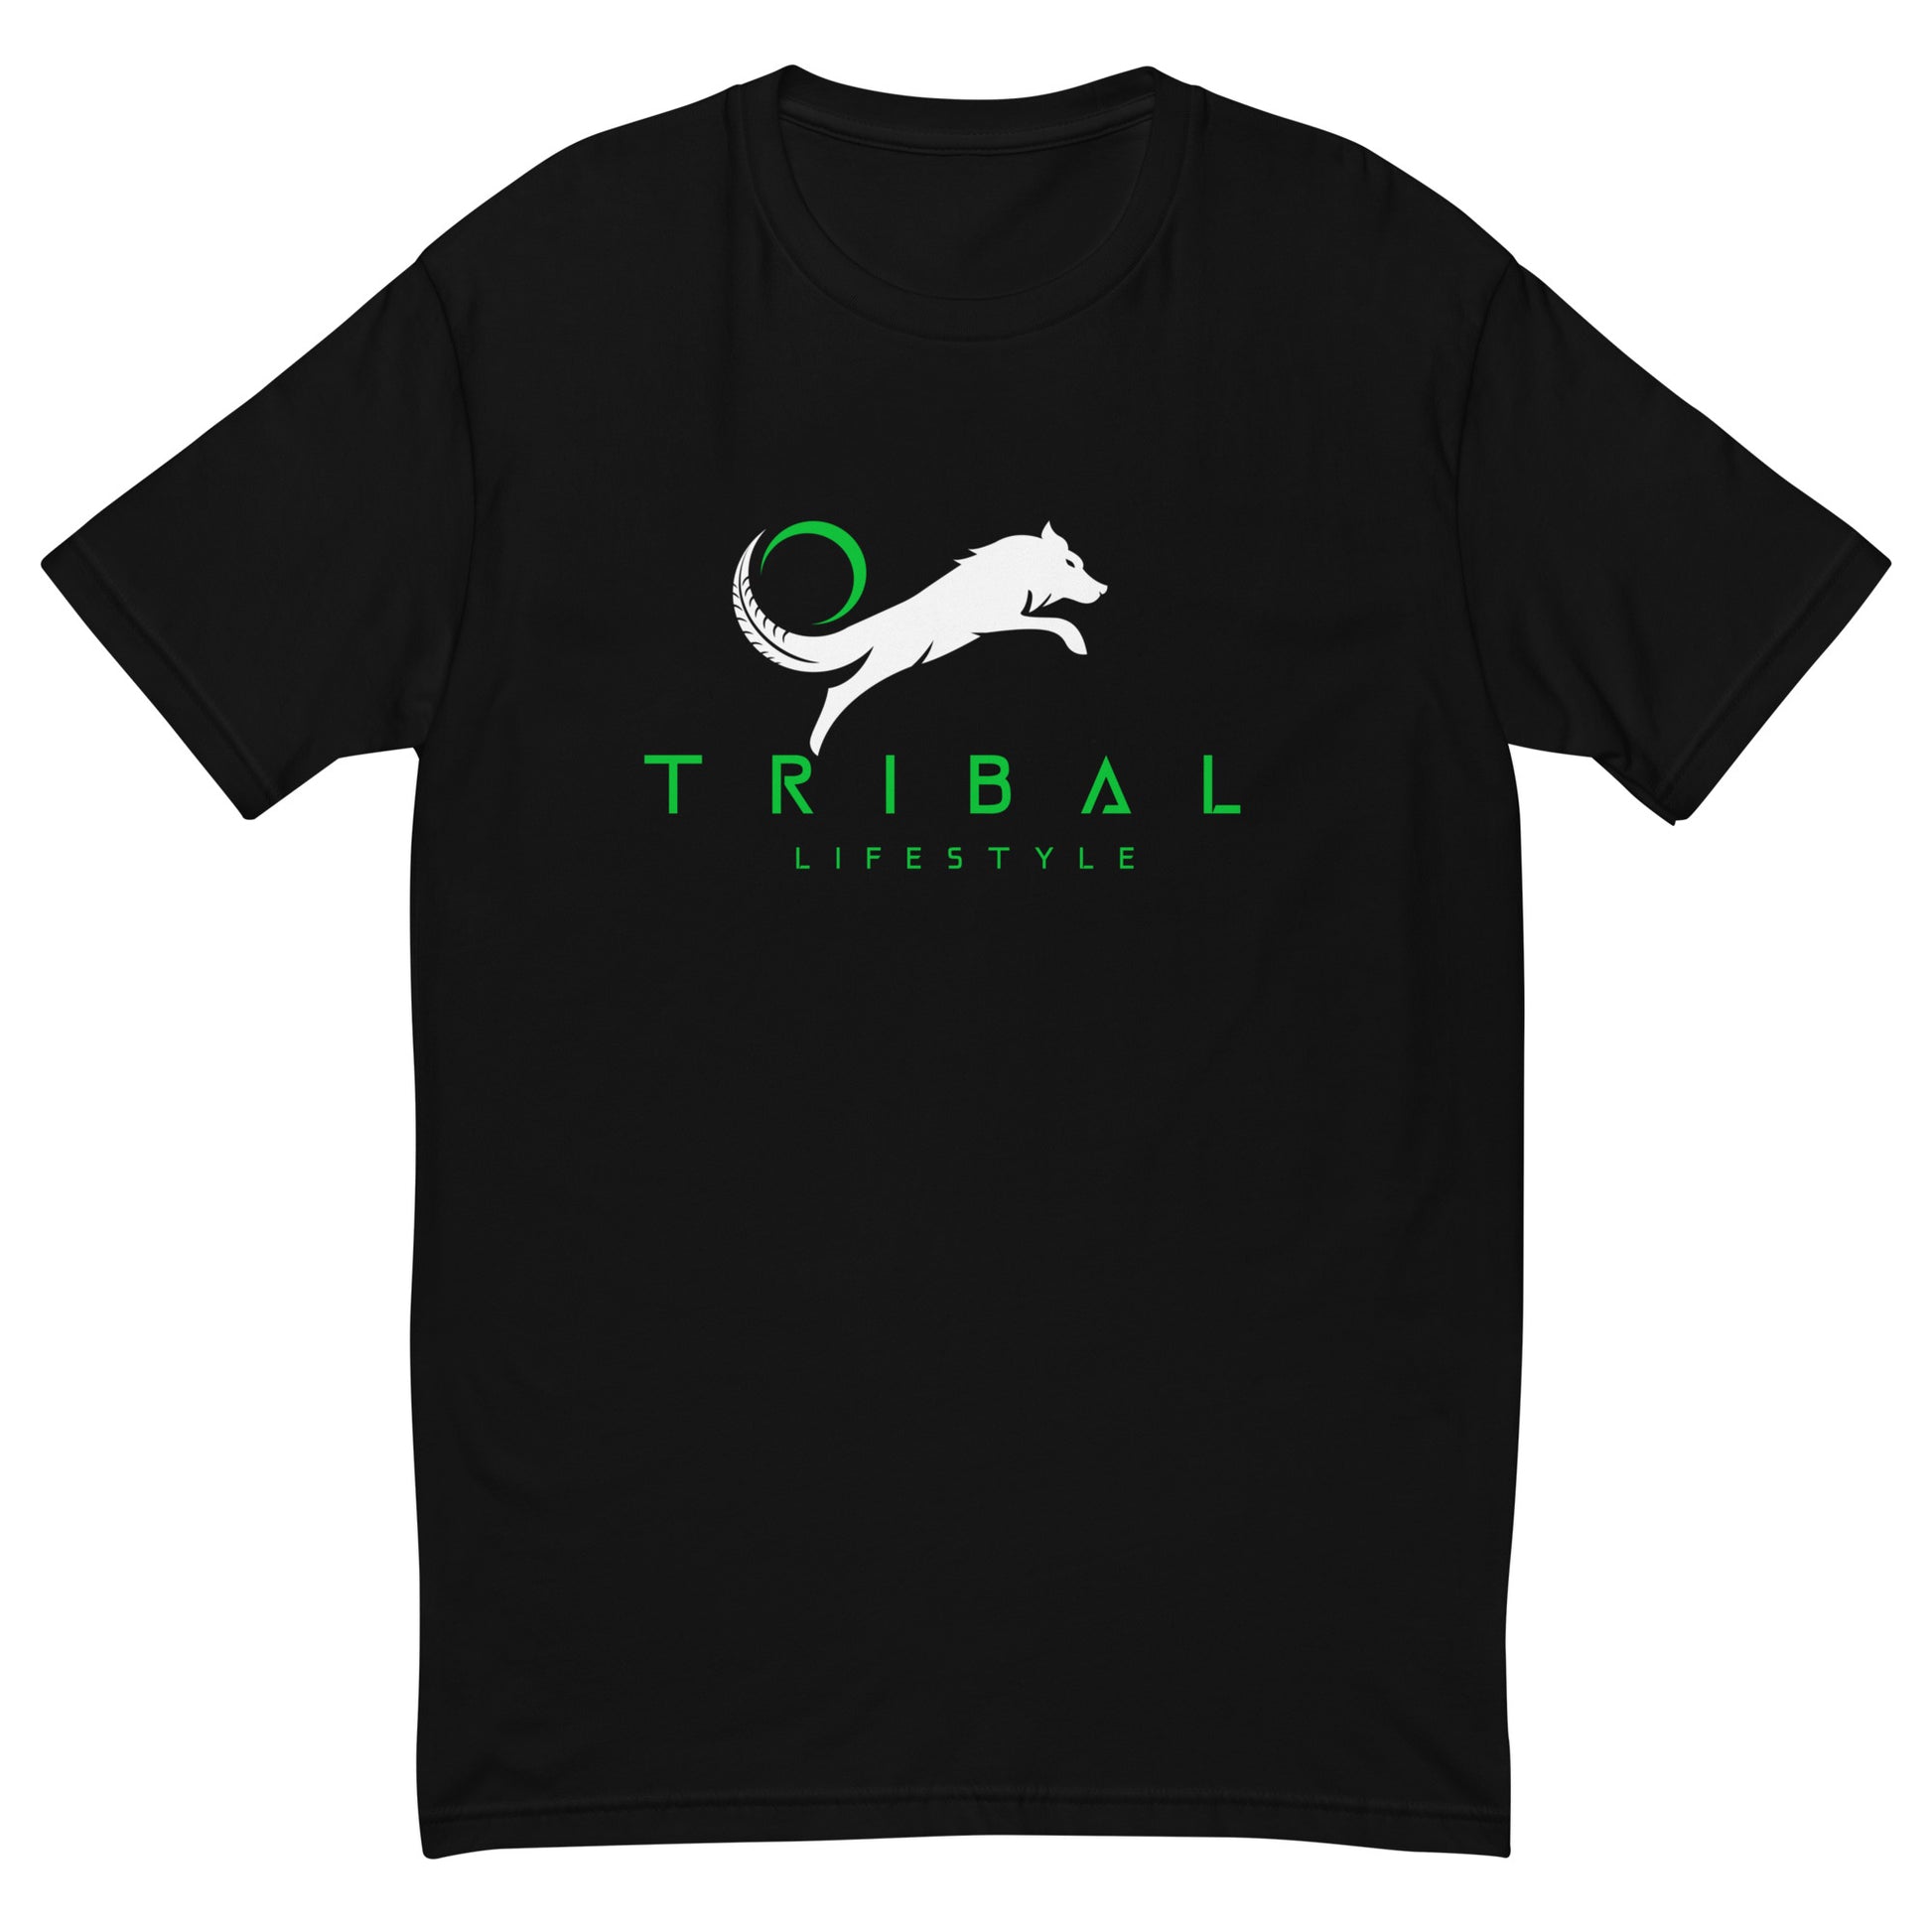 Flat mockup of Tribal lifestyle logo t-shirt